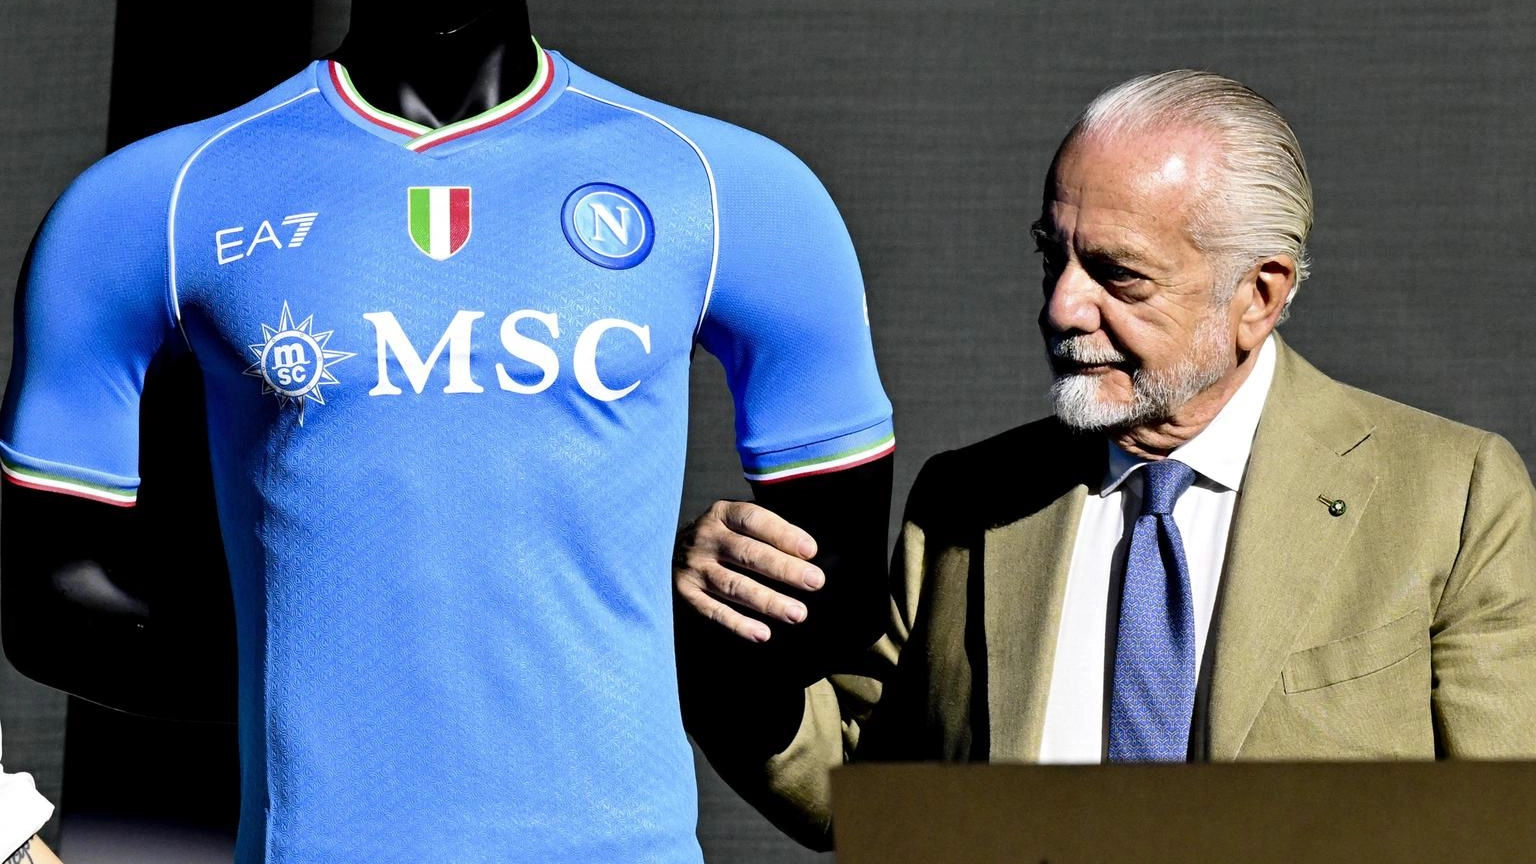 Calcio: De Laurentiis, bene l'idea di una Premier italiana